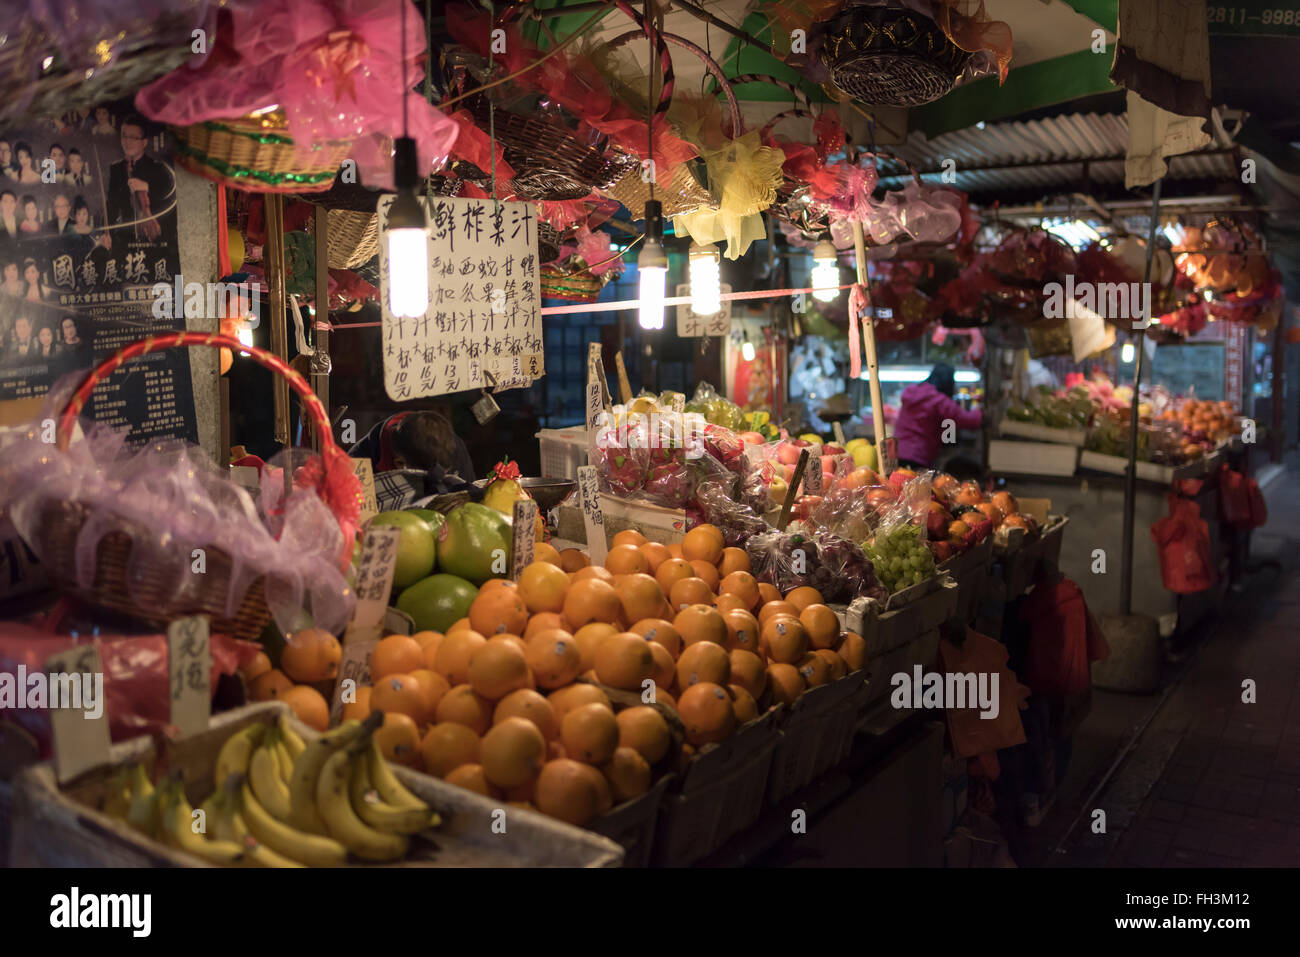 HONG KONG, CINA - 7 FEB 2016: tradizionale di Hong Kong di frutta stand ancora aperta di notte. Foto Stock